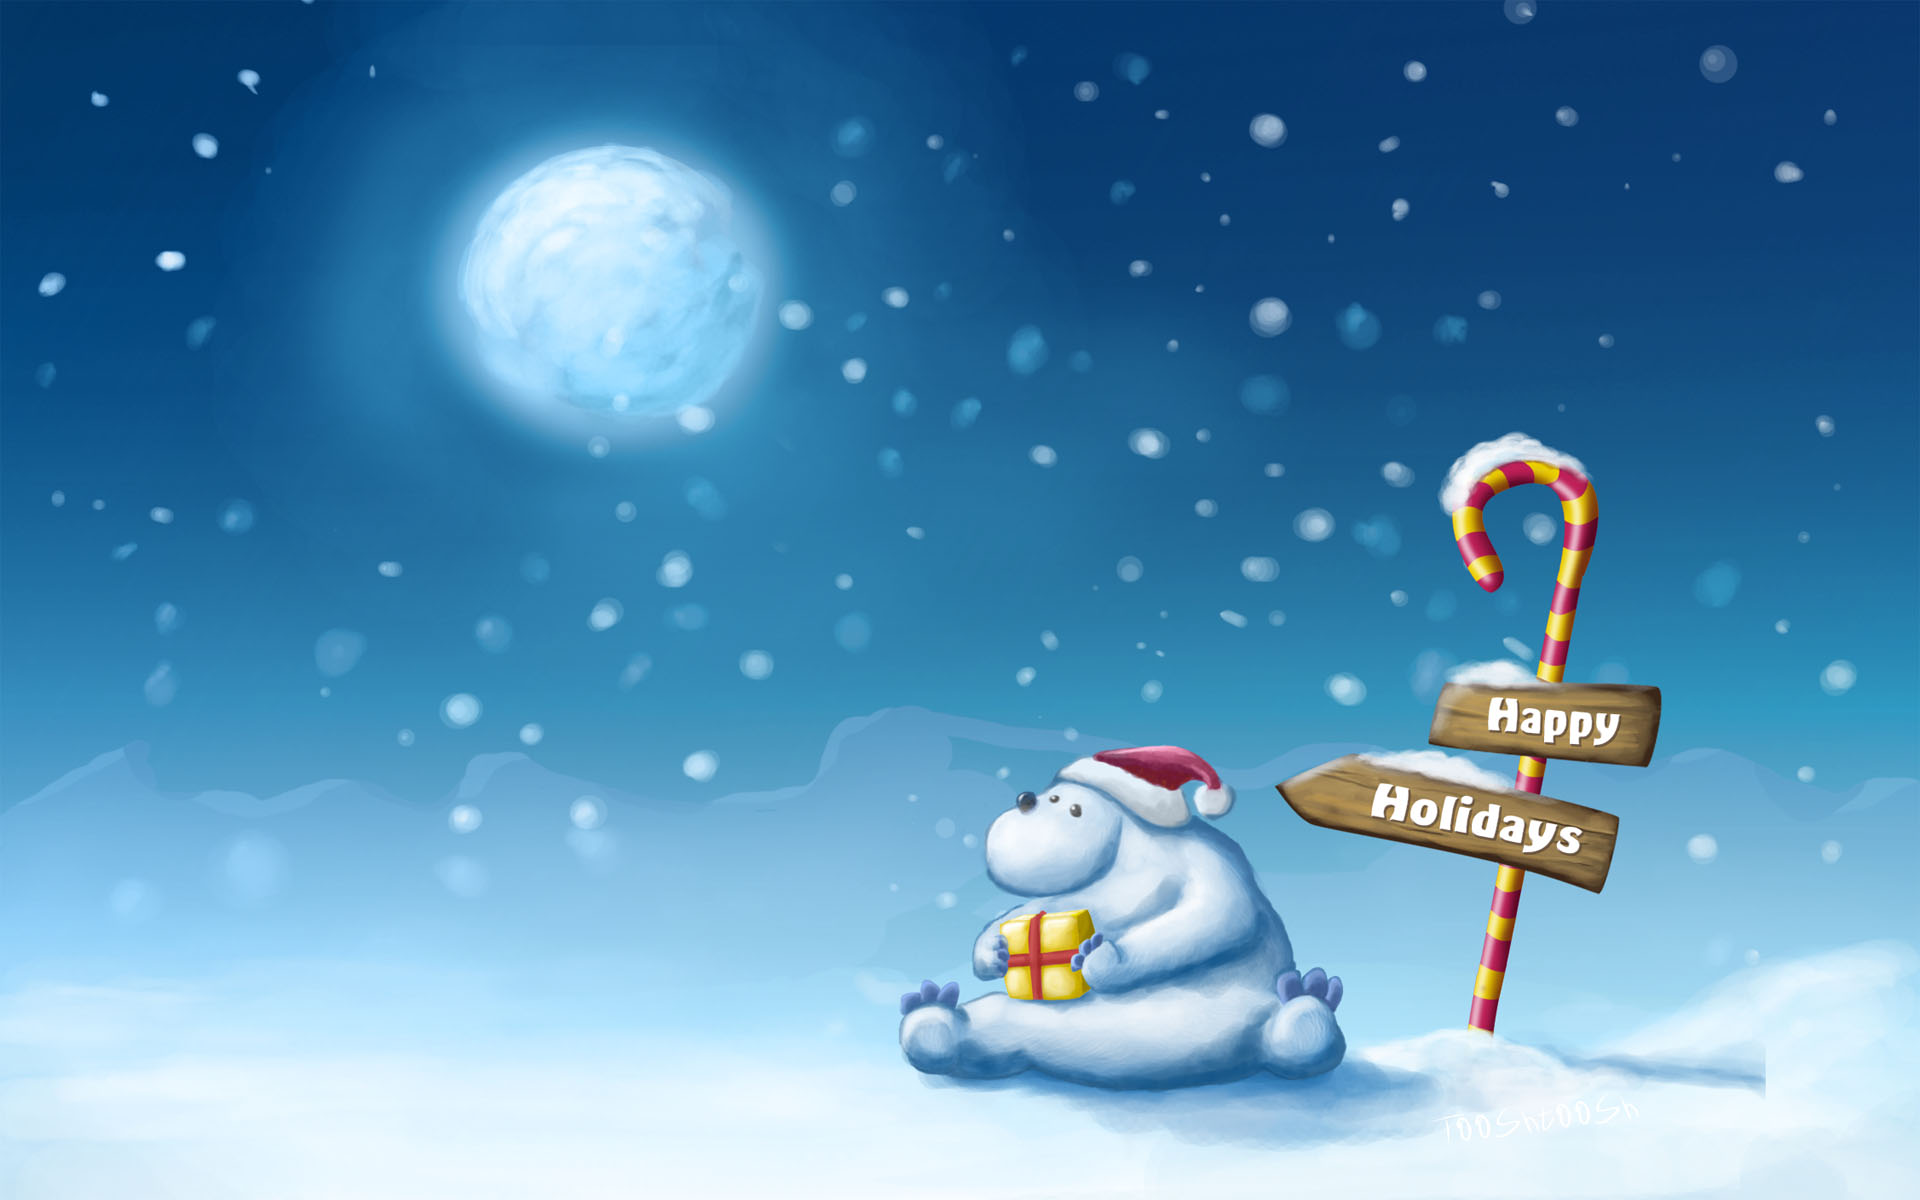 Polar Bear Christmas Snow Present Gift Holiday Holidays